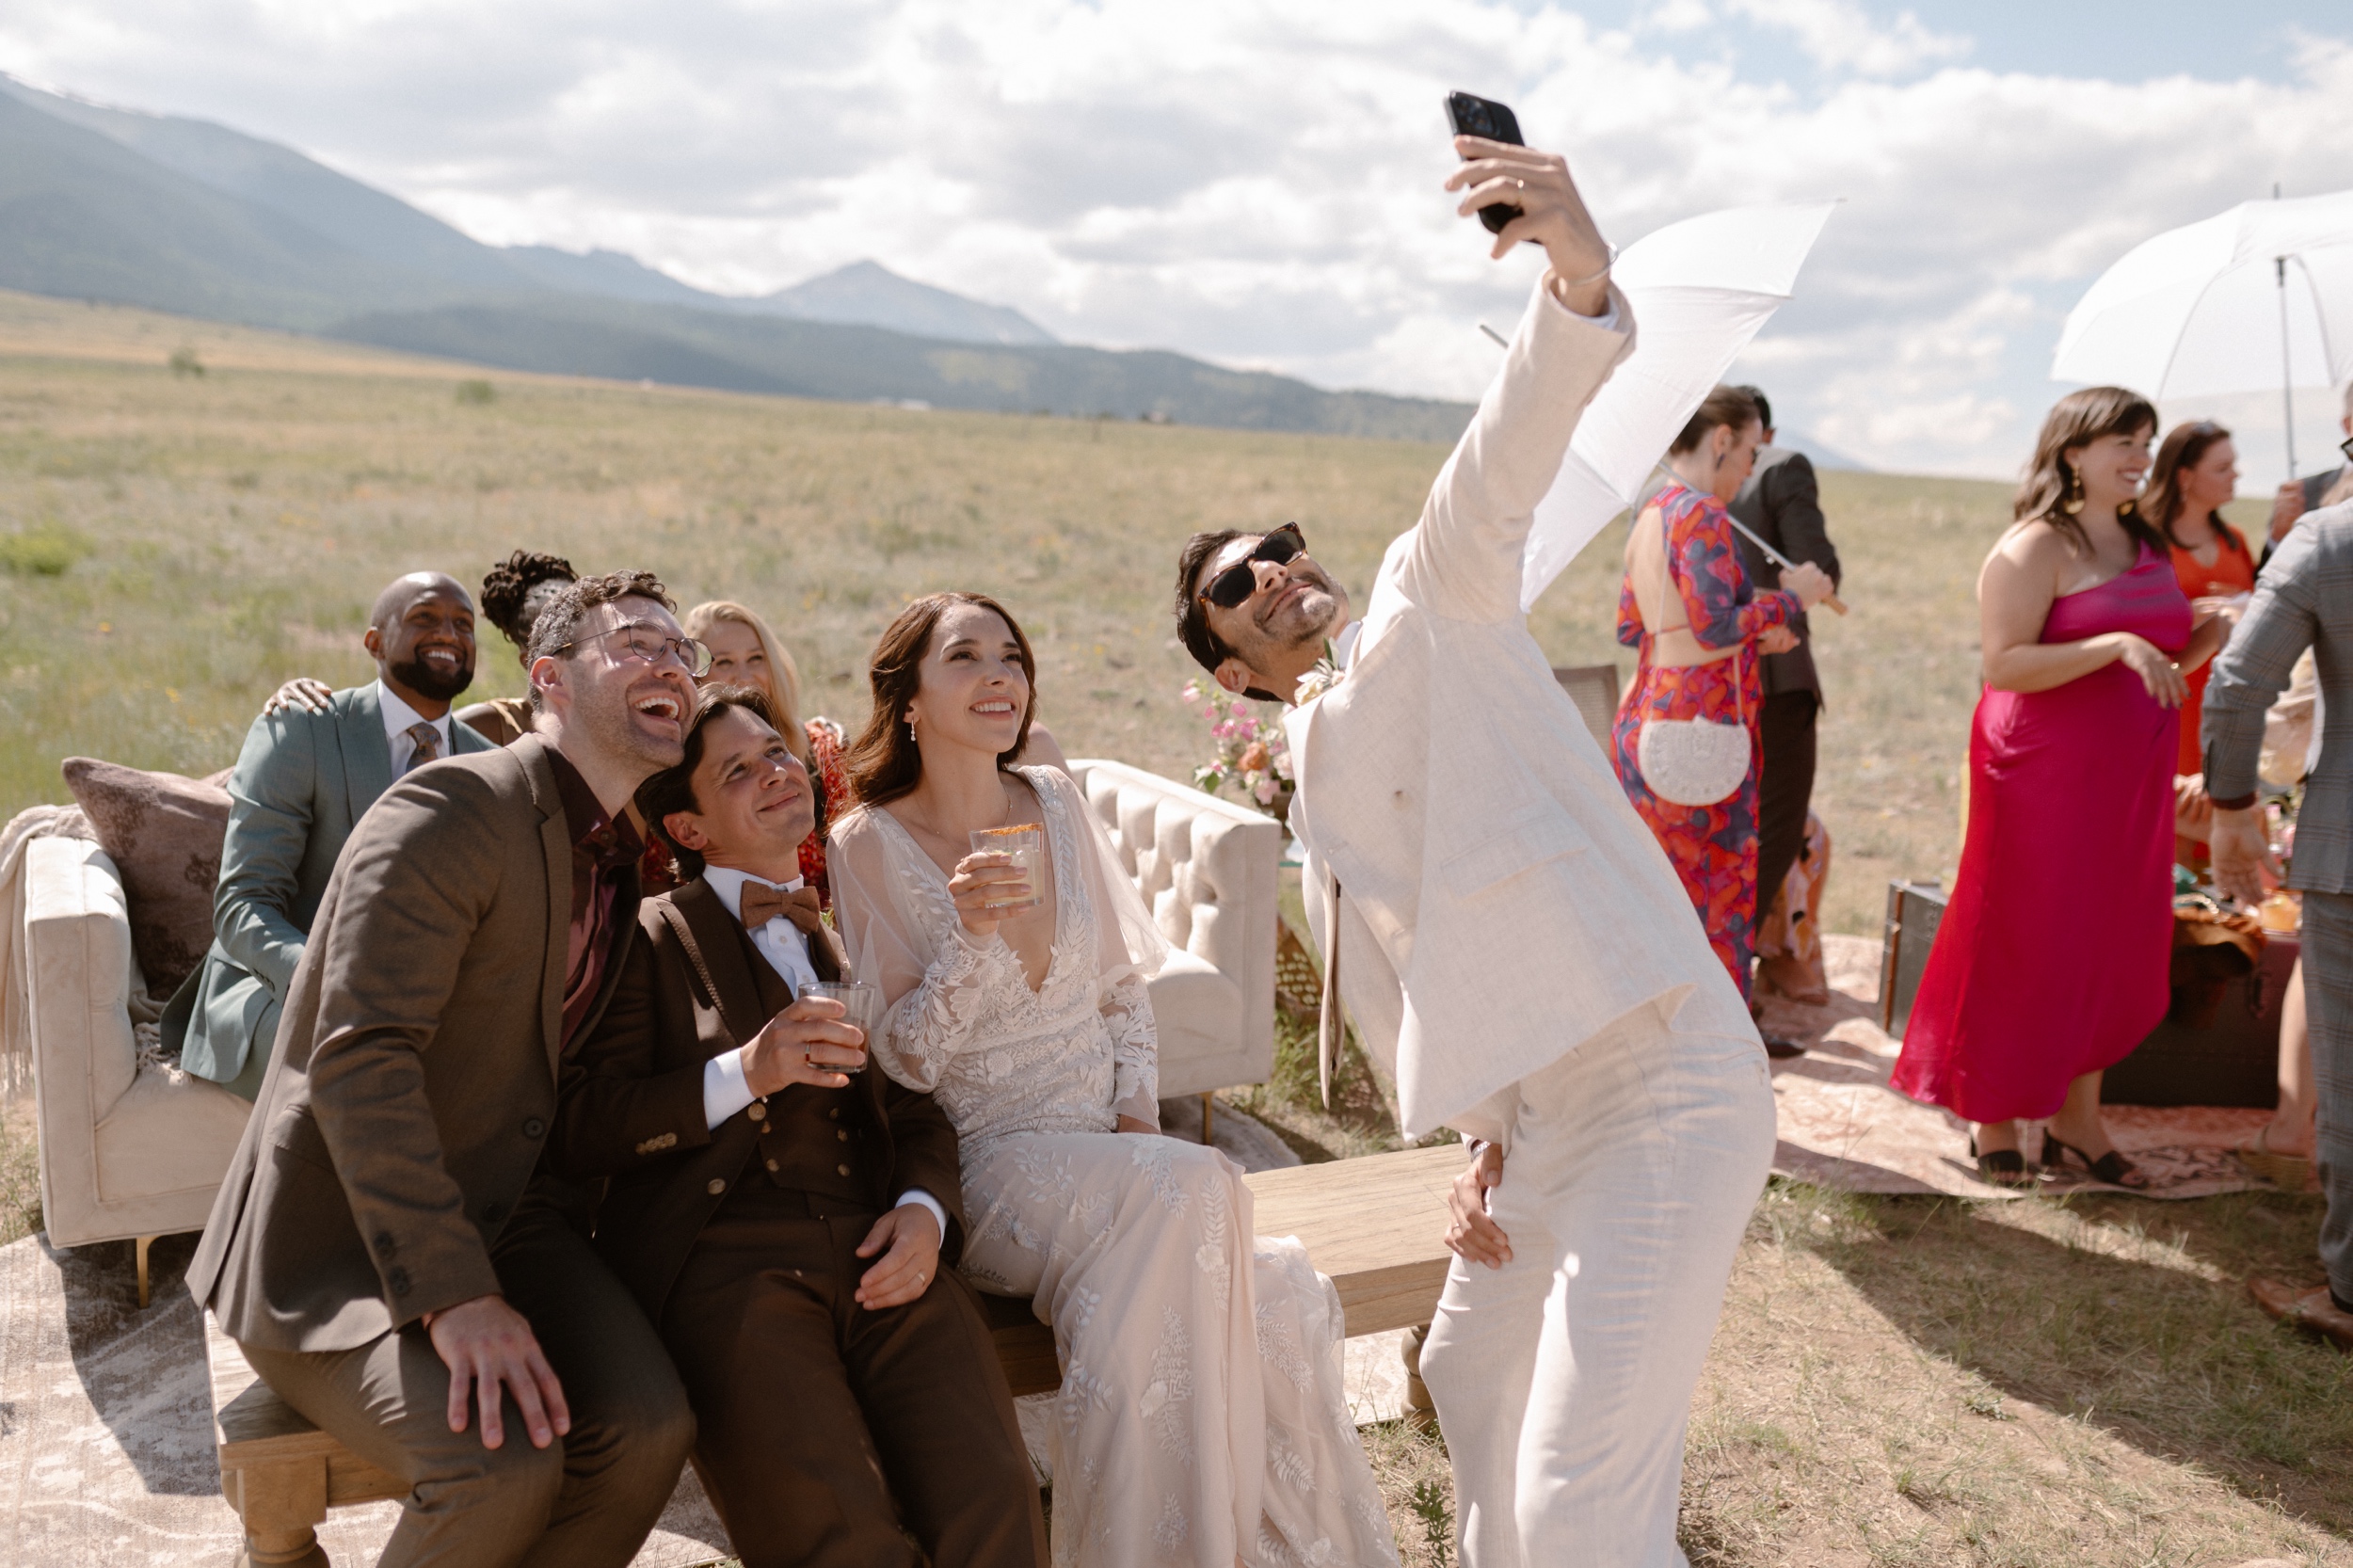 Wedding guests pose for photos at a Three Peaks Ranch wedding. Photo by Colorado wedding photographer Ashley Joyce.